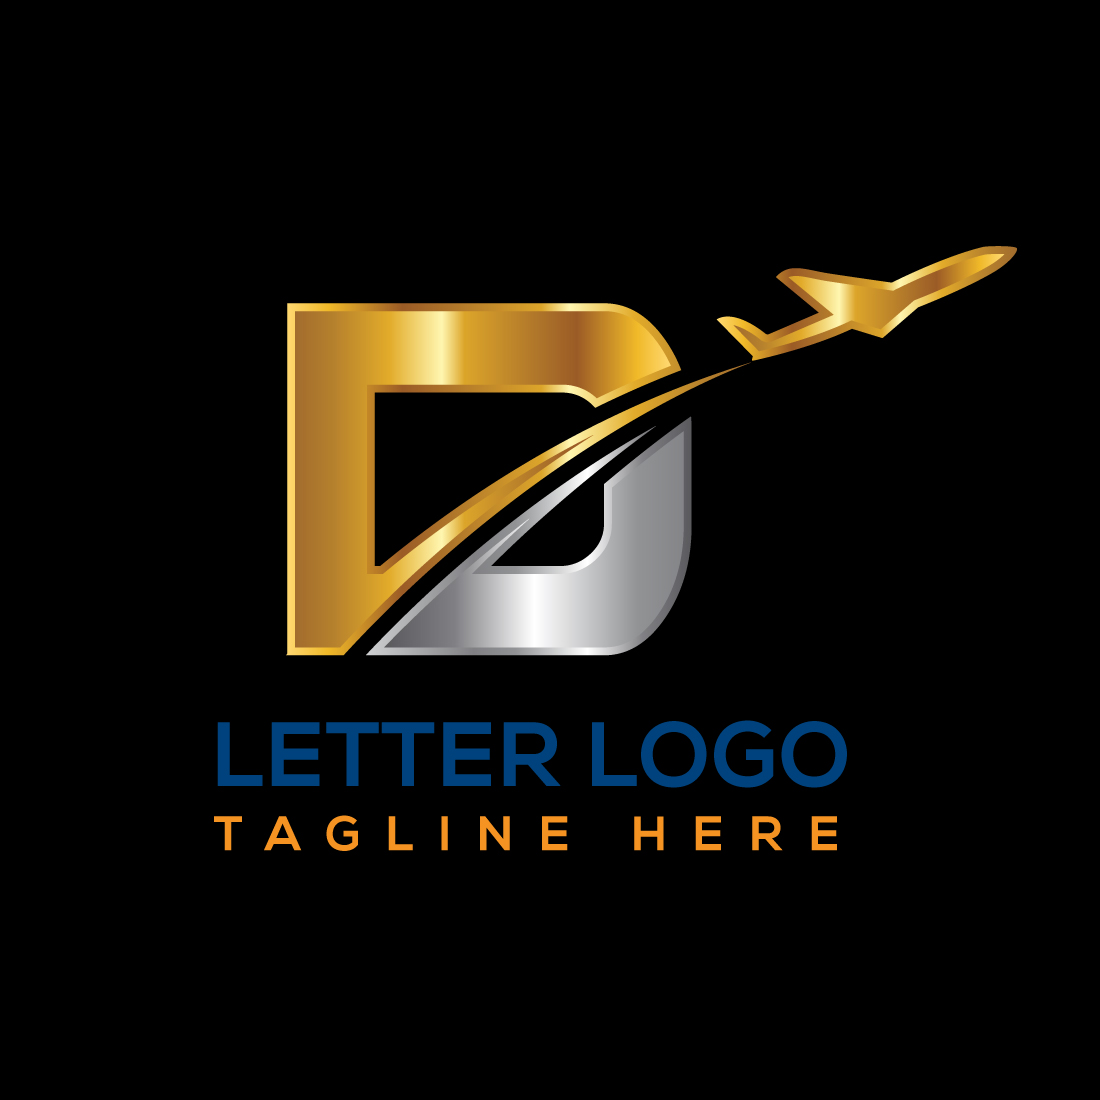 Airplane D Letter Logo Design cover image.